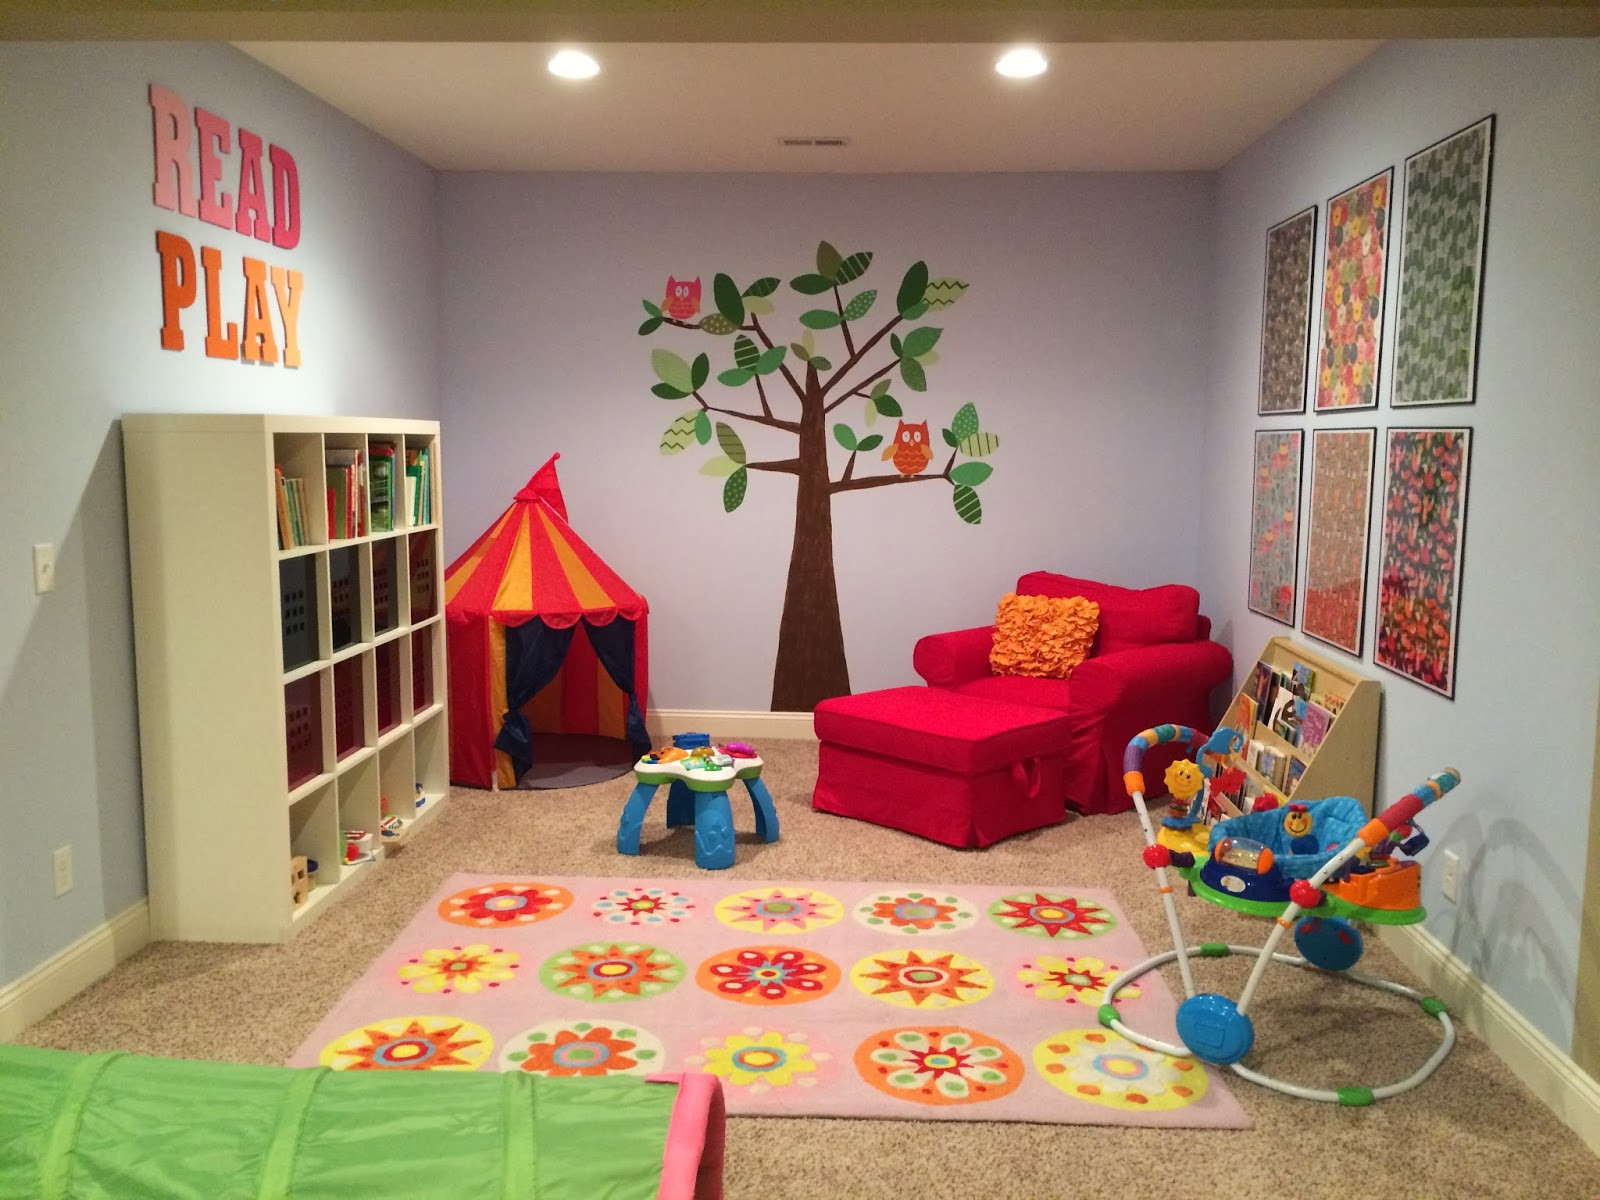 Playroom Ideas For Kids
 Furniture for Kids Playroom Ideas